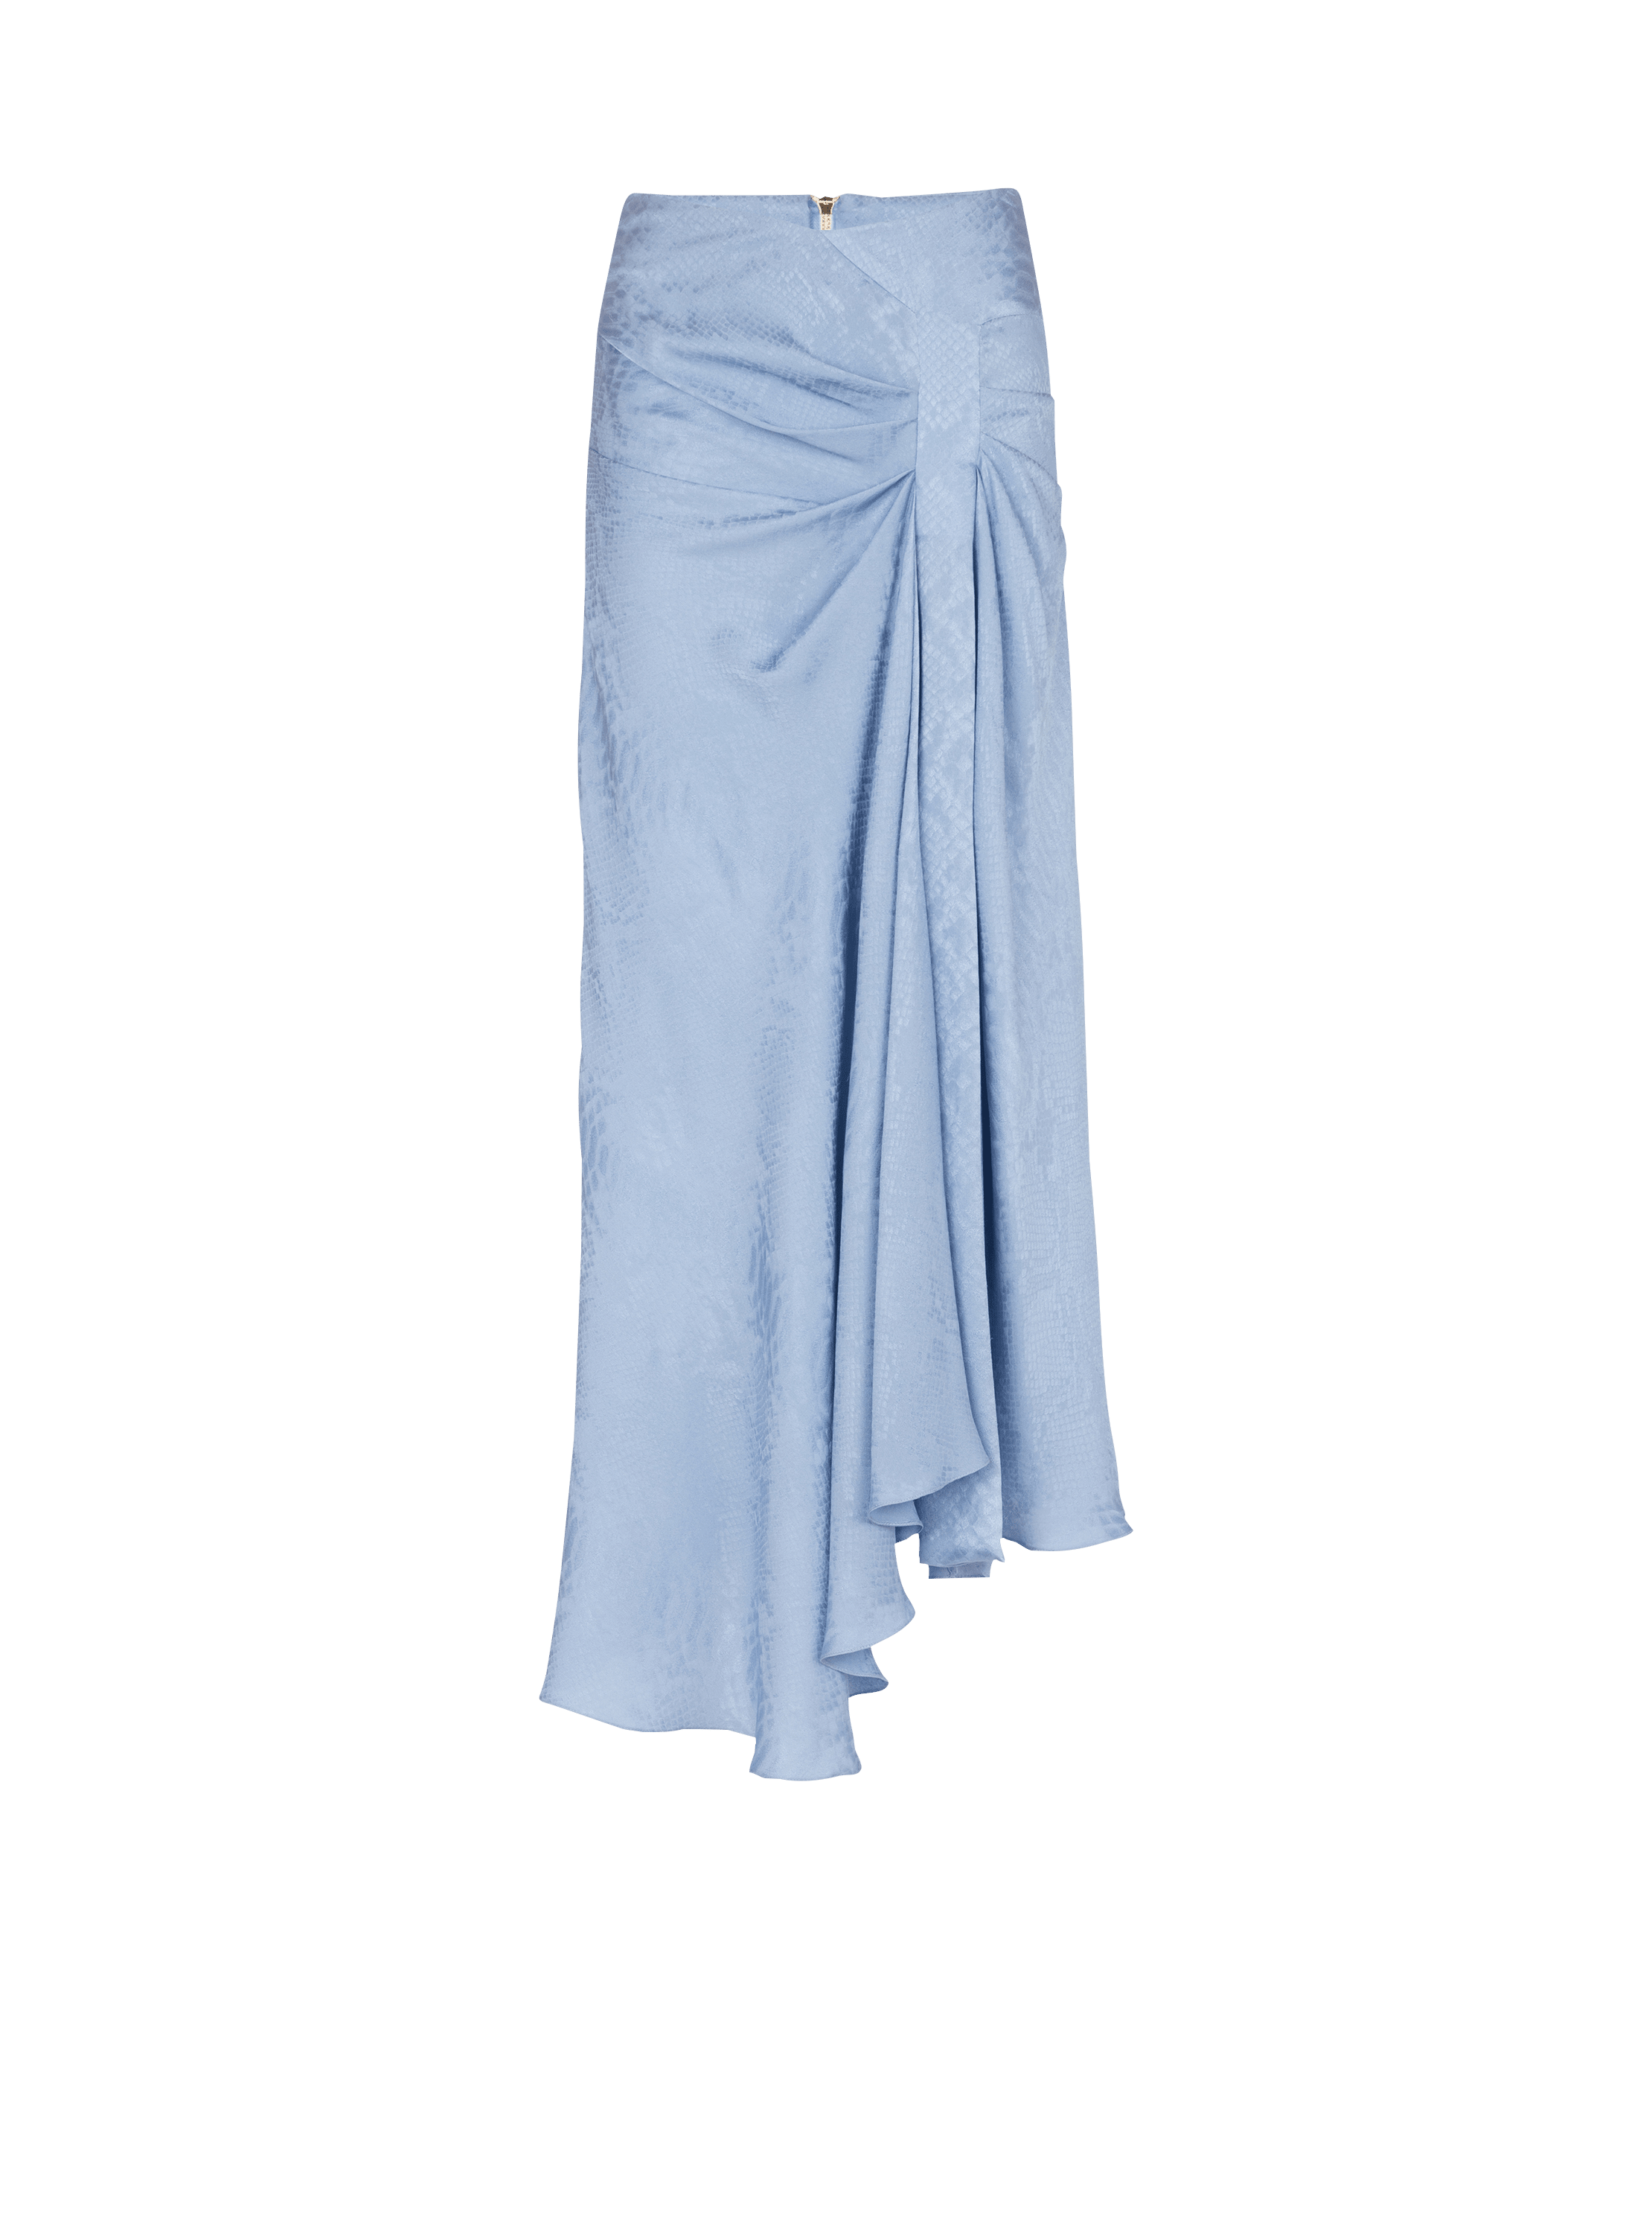 Snakeskin silk jacquard skirt, blue, hi-res